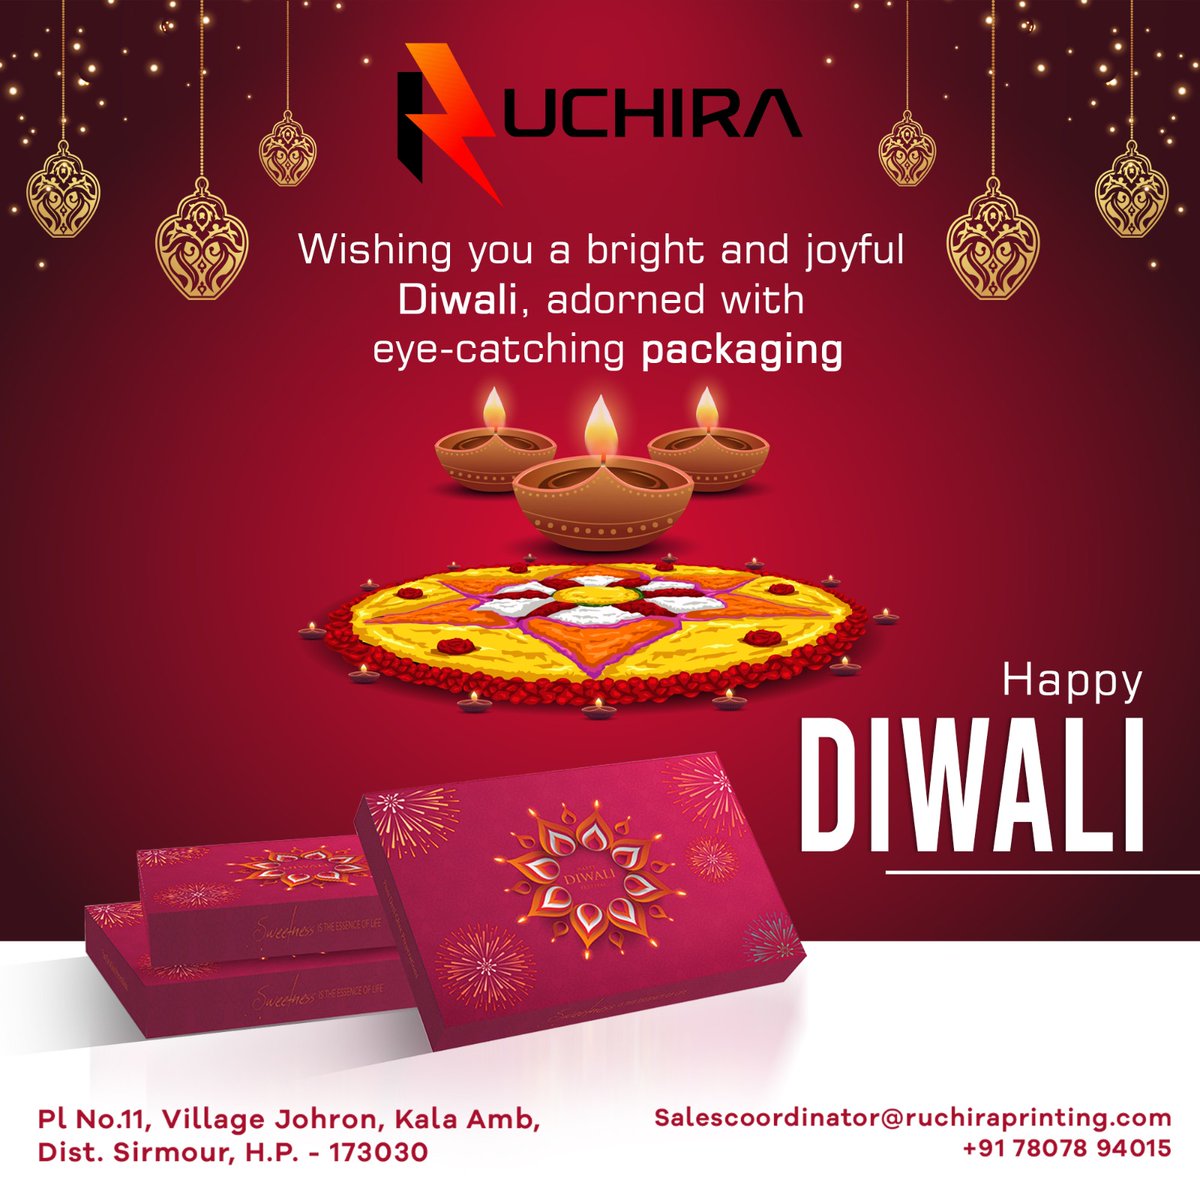 Ruchira wishes you a blessed celebration.

#ruchirapackaging #ruchiraprintingpackaging #HappyDiwali #Diwali #Diwali2023 #DiwaliLights #DiwaliWishes #DiwaliInIndia #printingsolutions #packagingbox #giftpackagingshop #giftpackaging #CreativeWrapping #GiftPackagingIdeas #india